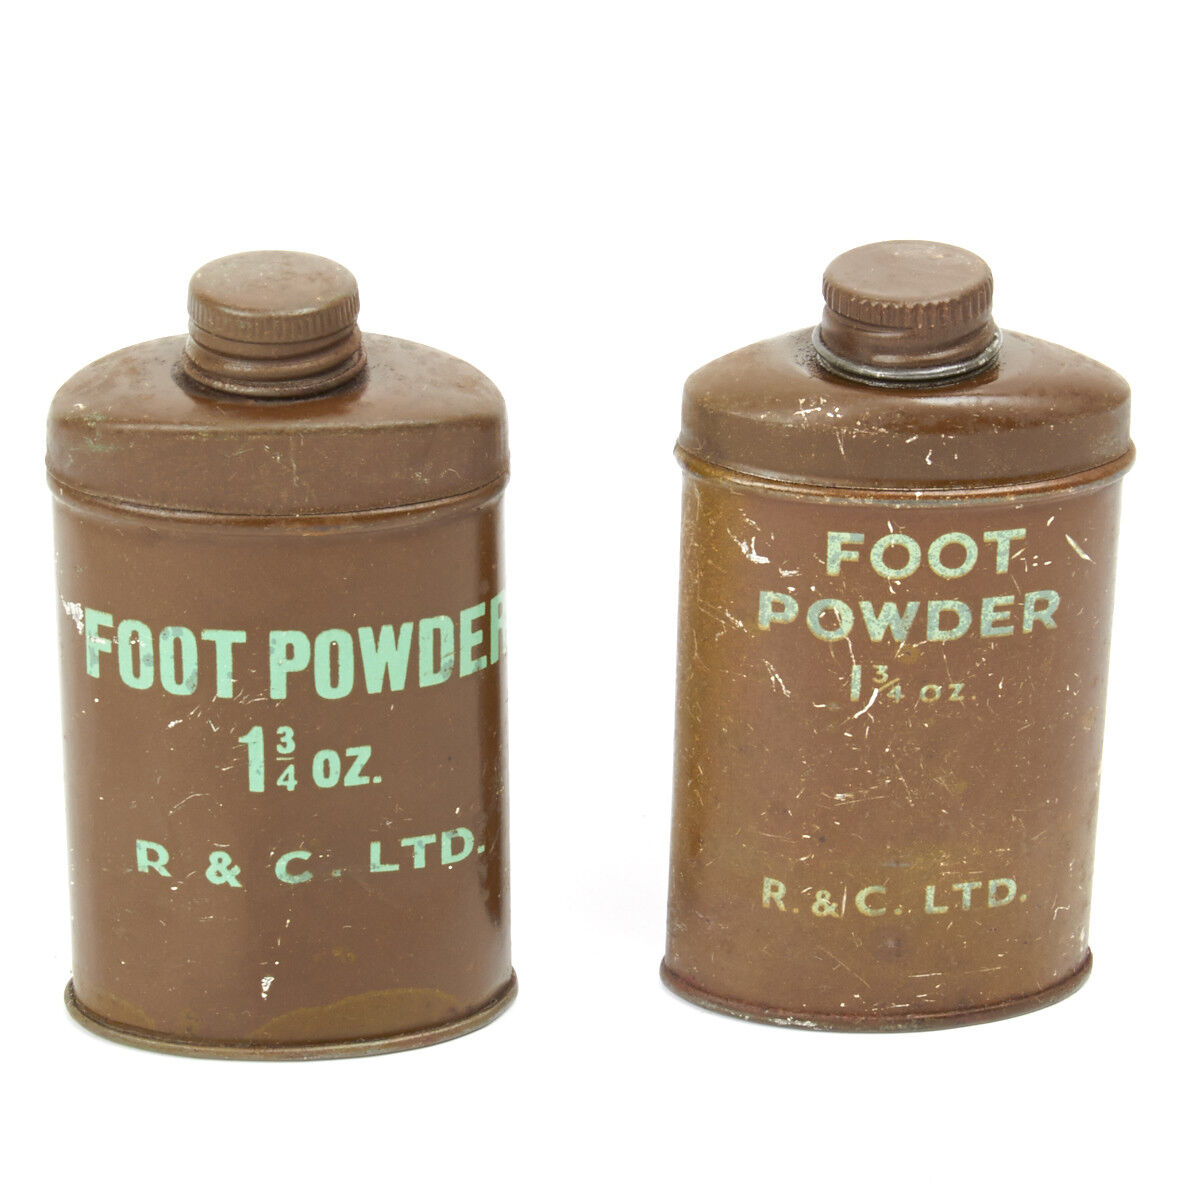 Original WWII British Army Foot Powder, Unissued- Set of 2